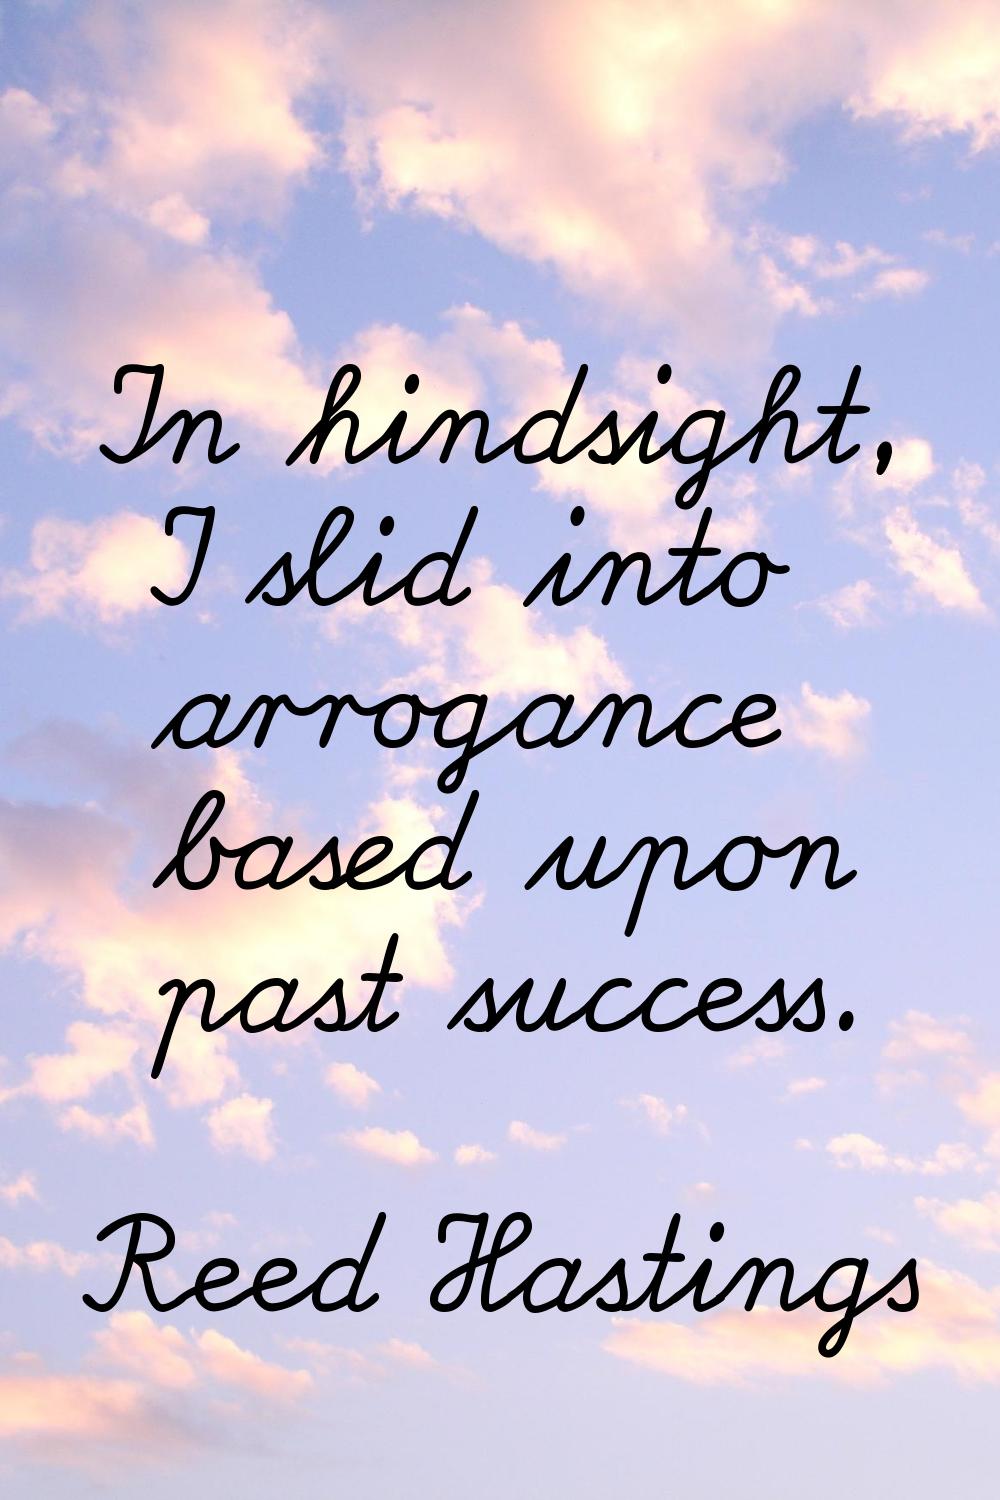 In hindsight, I slid into arrogance based upon past success.